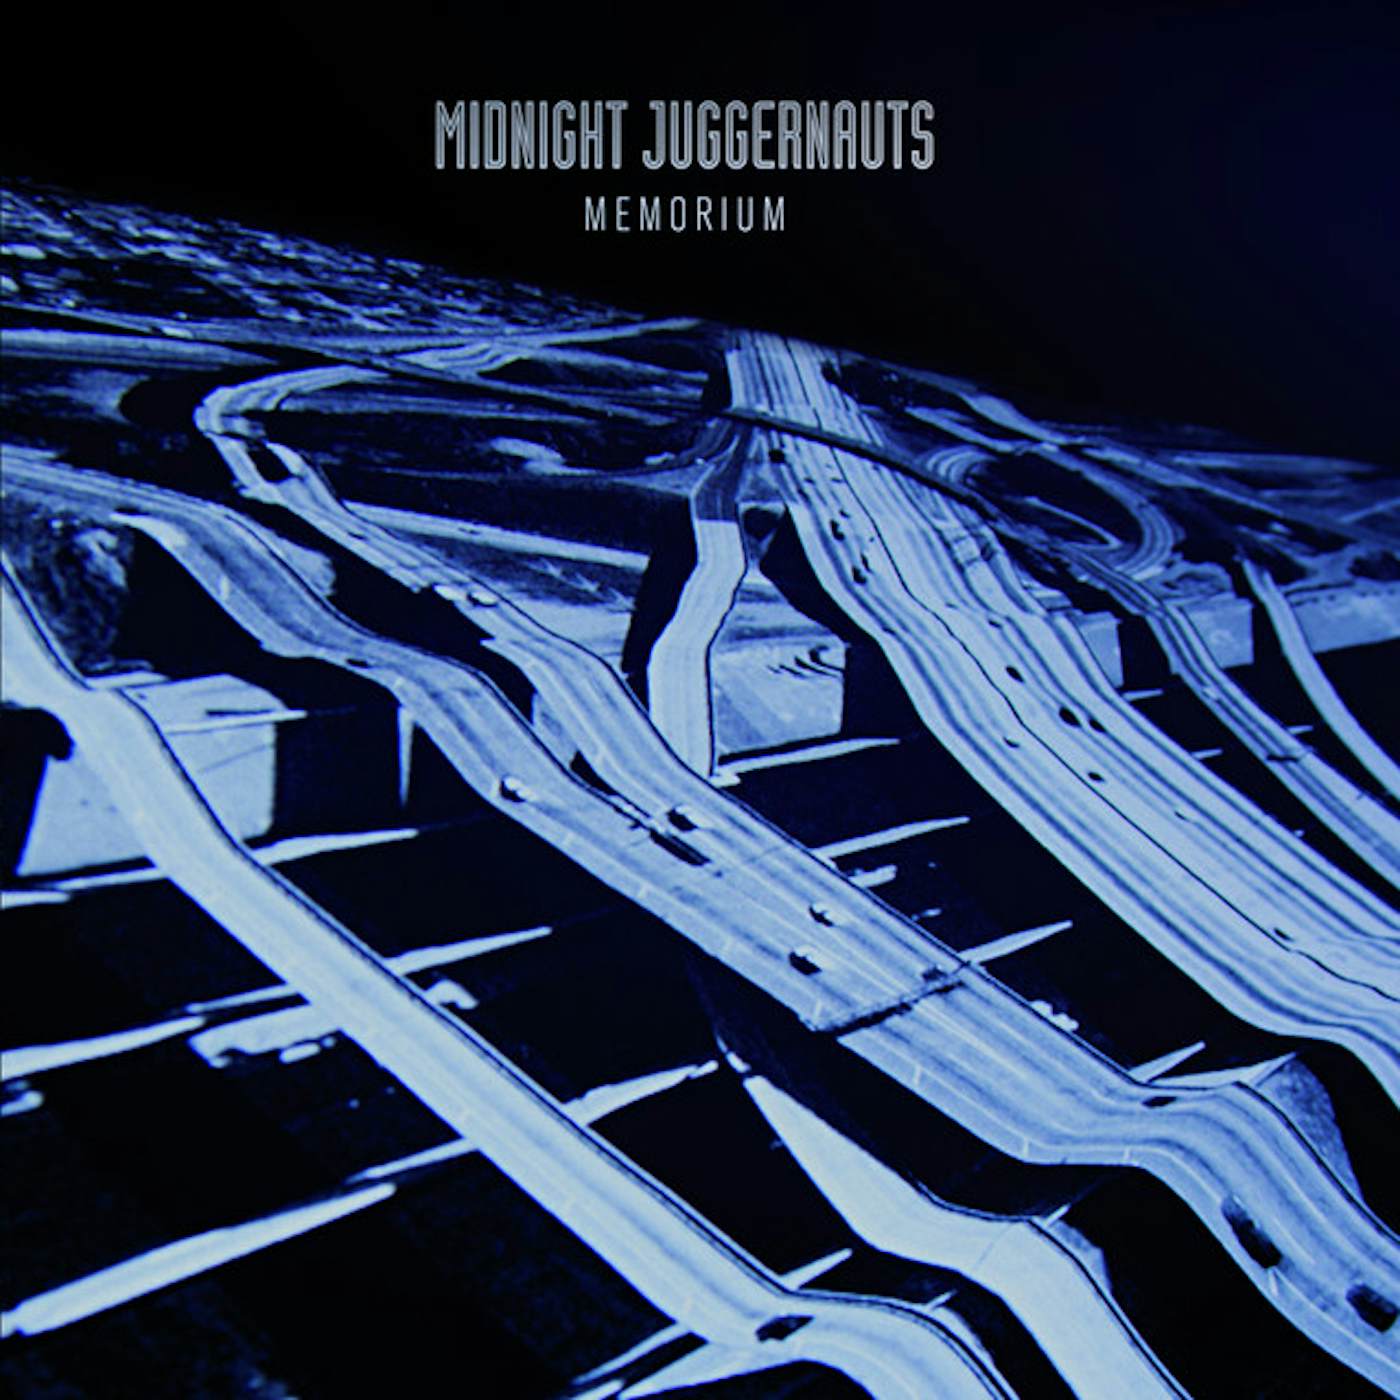 Midnight Juggernauts Memorium Vinyl Record